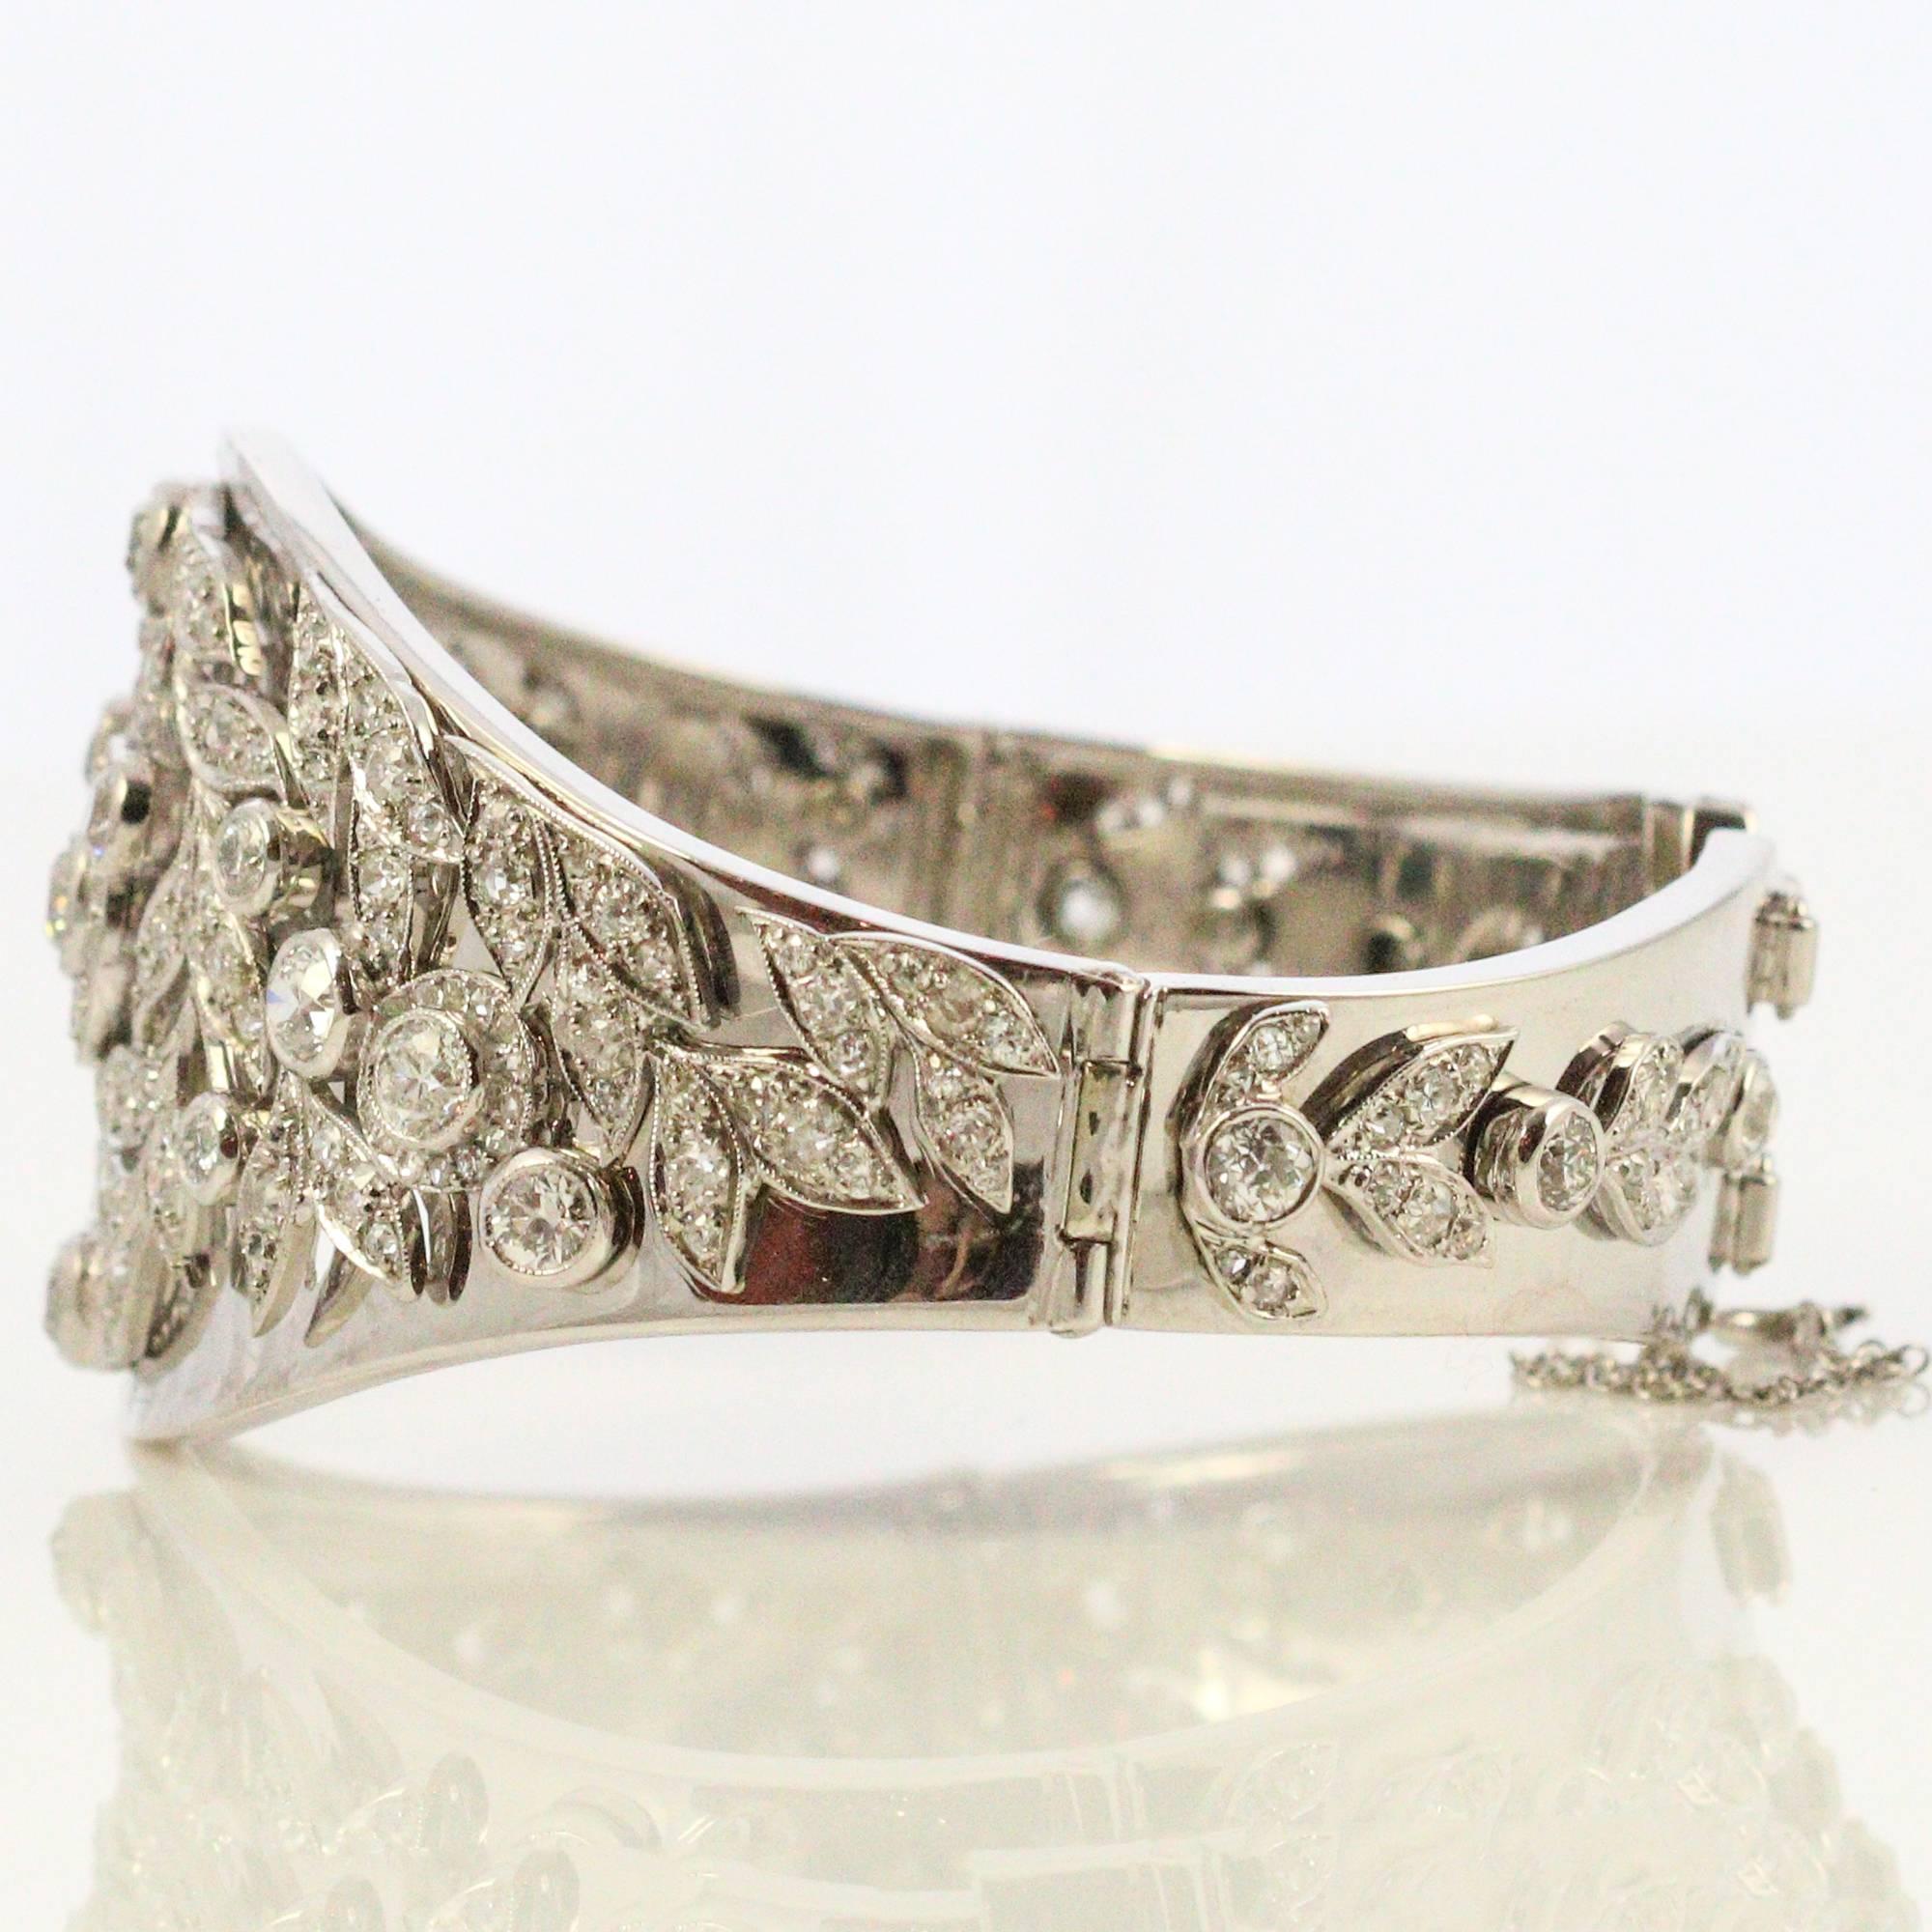 Women's or Men's Edwardian Vintage White Gold and Diamond Wide Bangle Bracelet